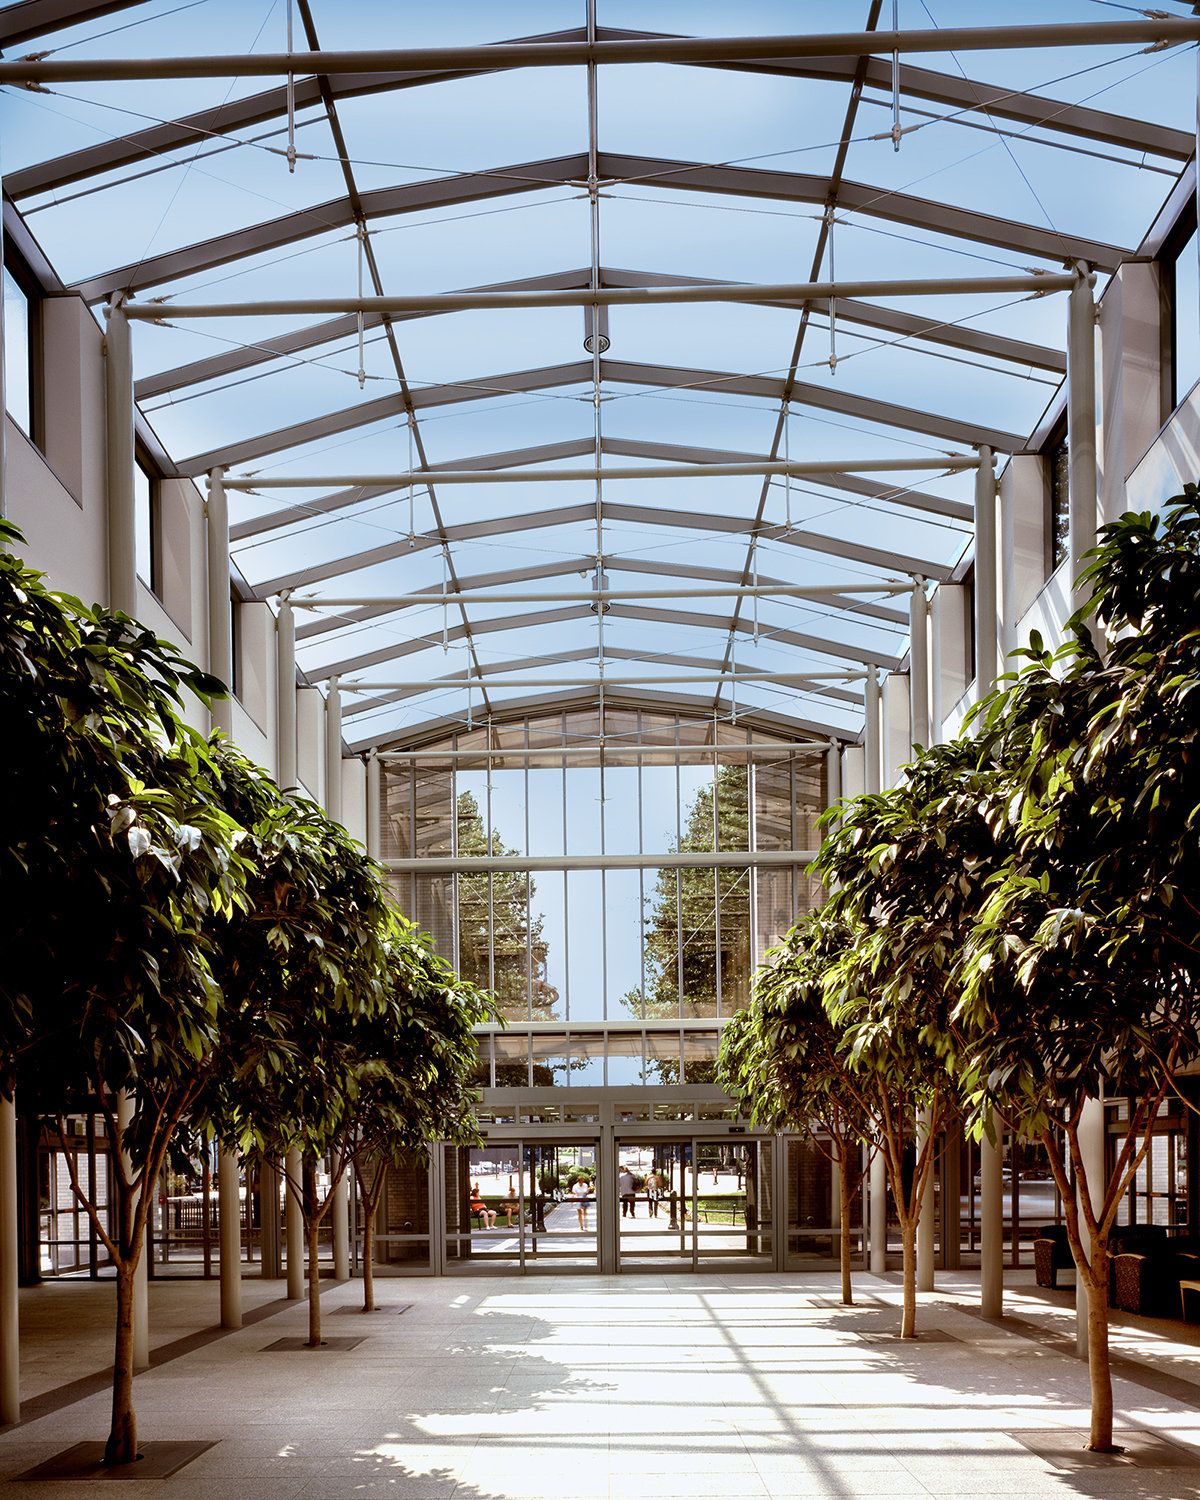 4 tskp hartford hospital lobby expansion renno interior detail lobby entrance skylight 1400 0x0x1200x1500 q85